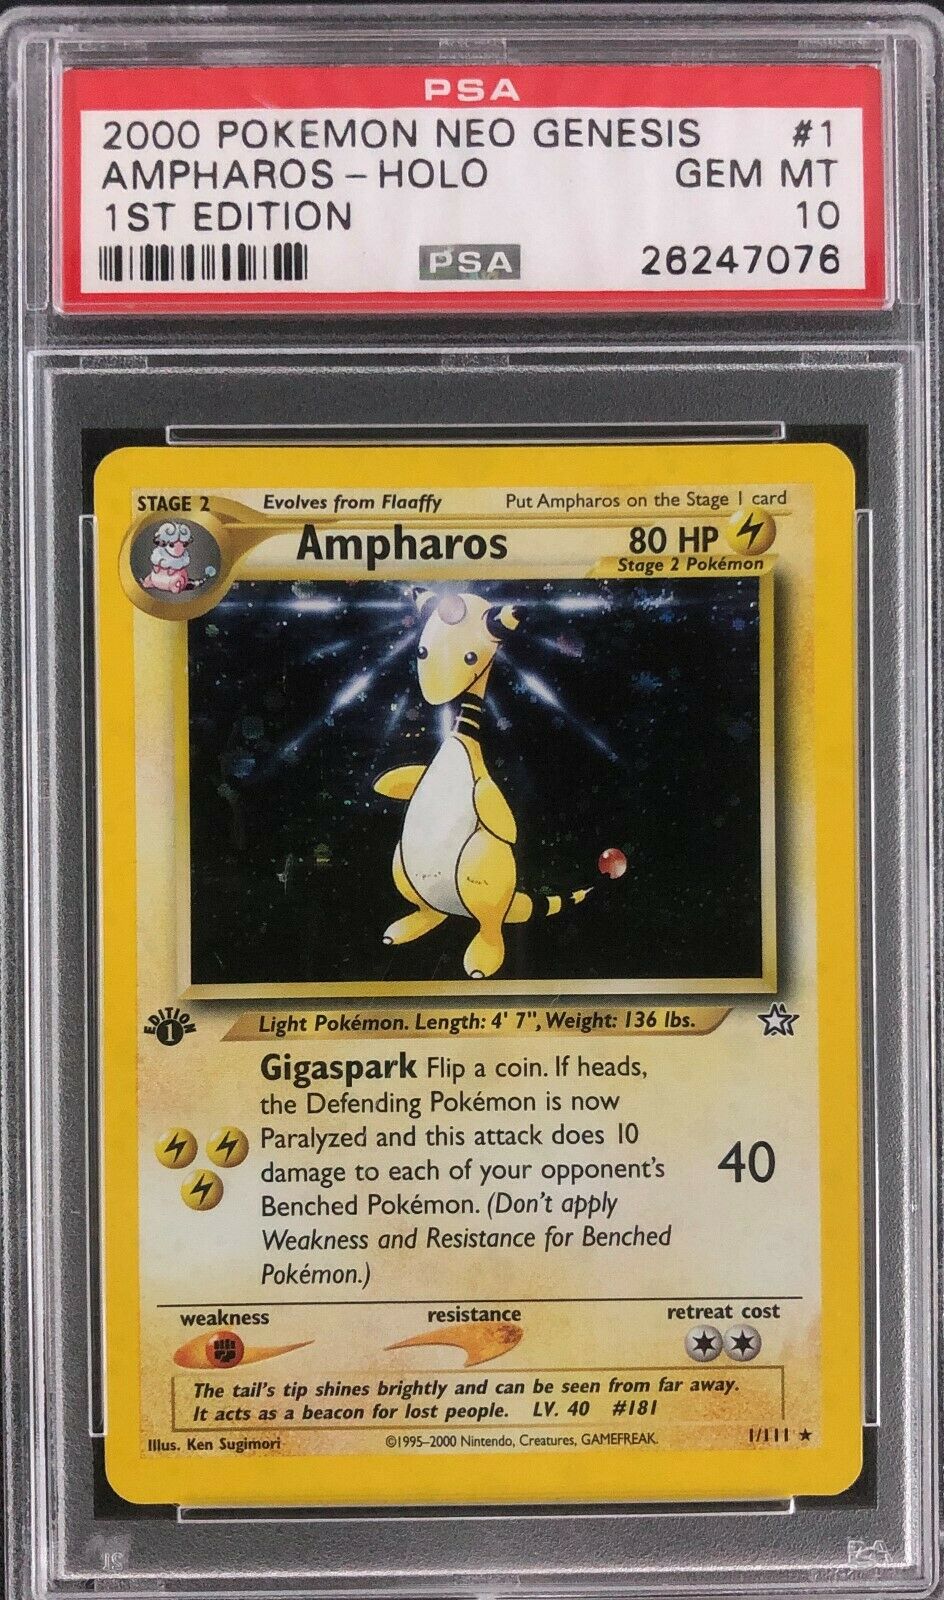 1st Edition Neo Genesis Ampharos Holo Pokemon Card Mint PSA 10